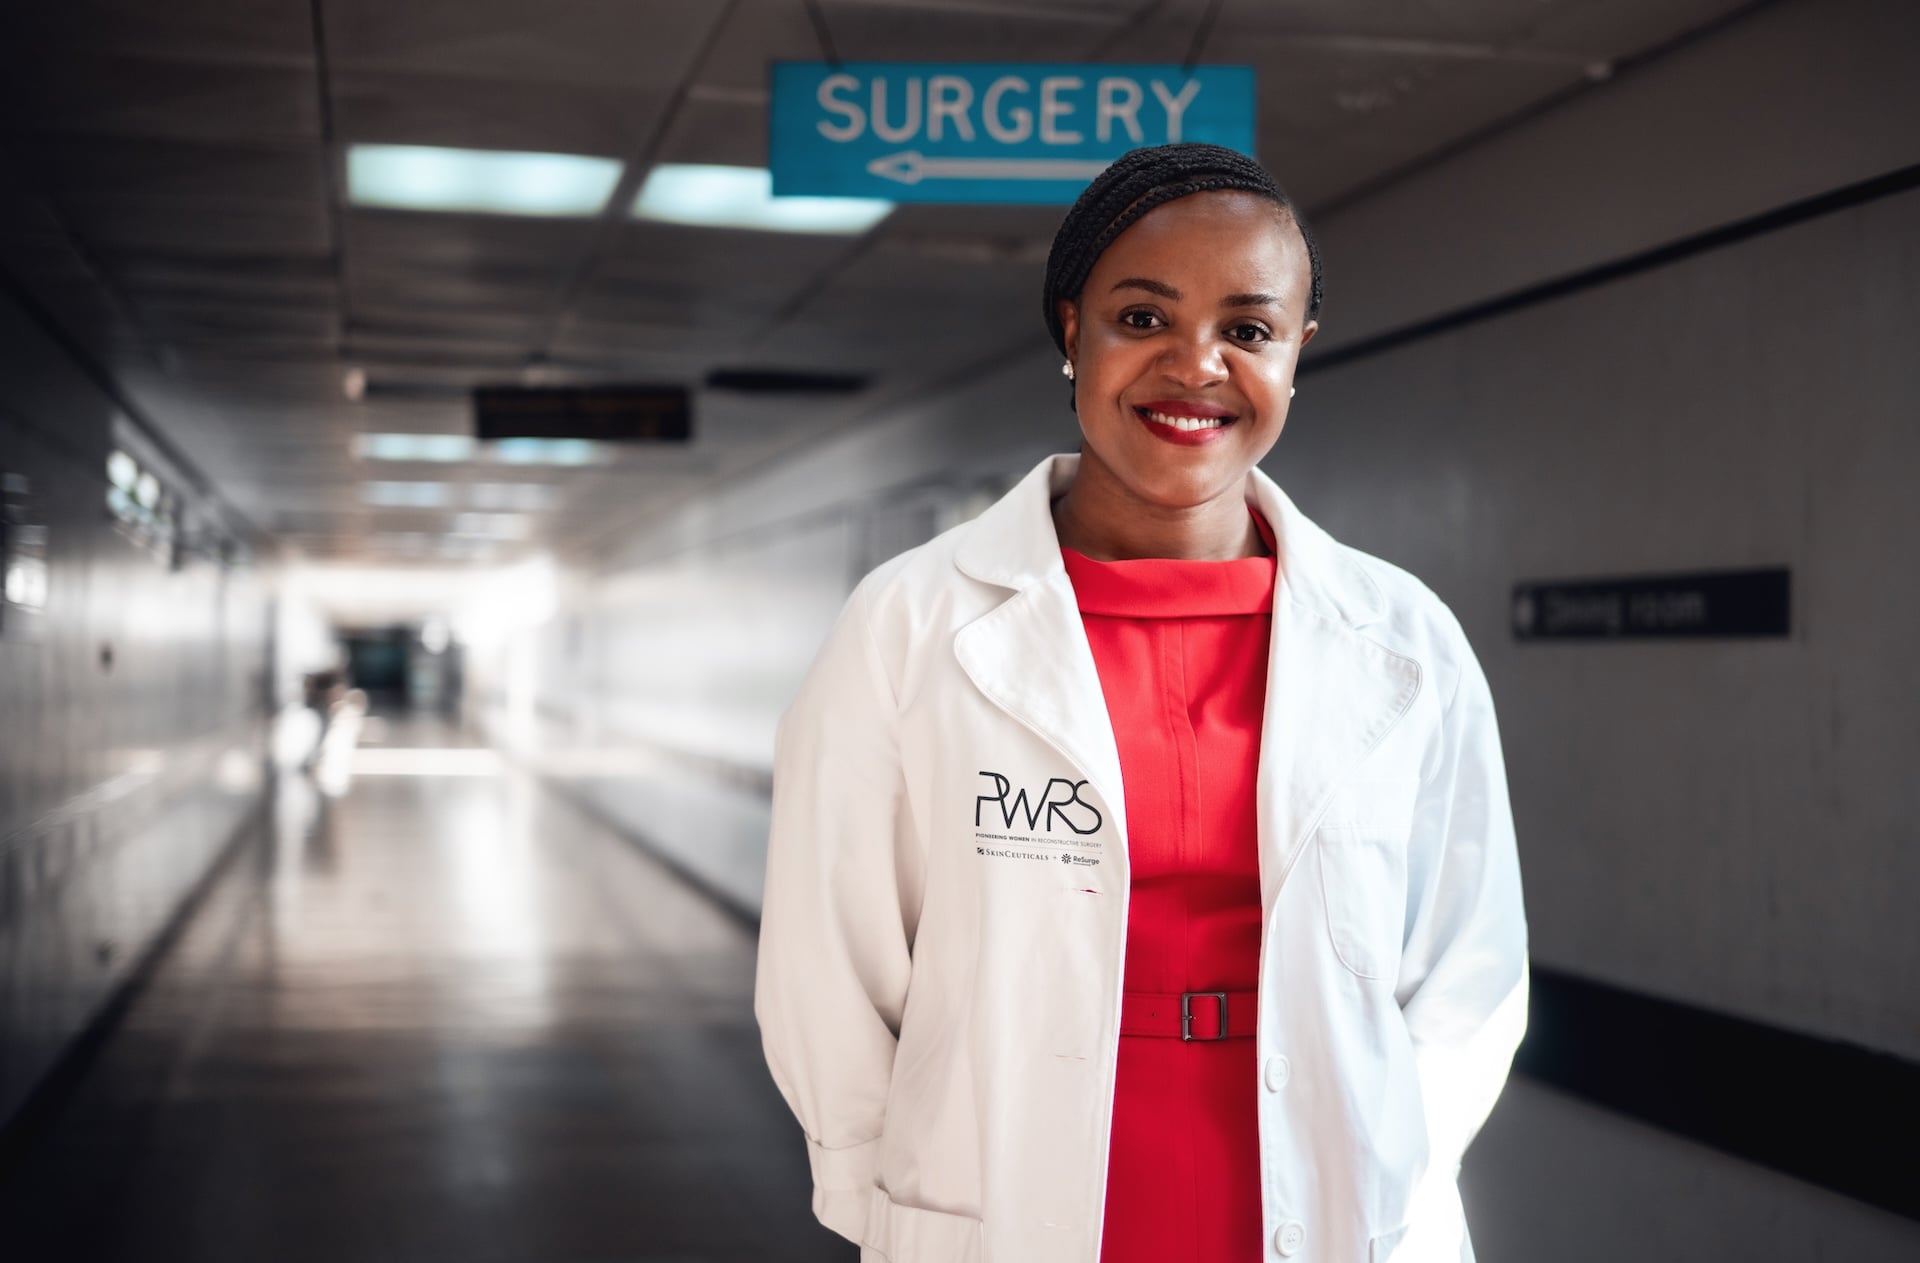 Dr. Thandi smiling in a hospital hallway